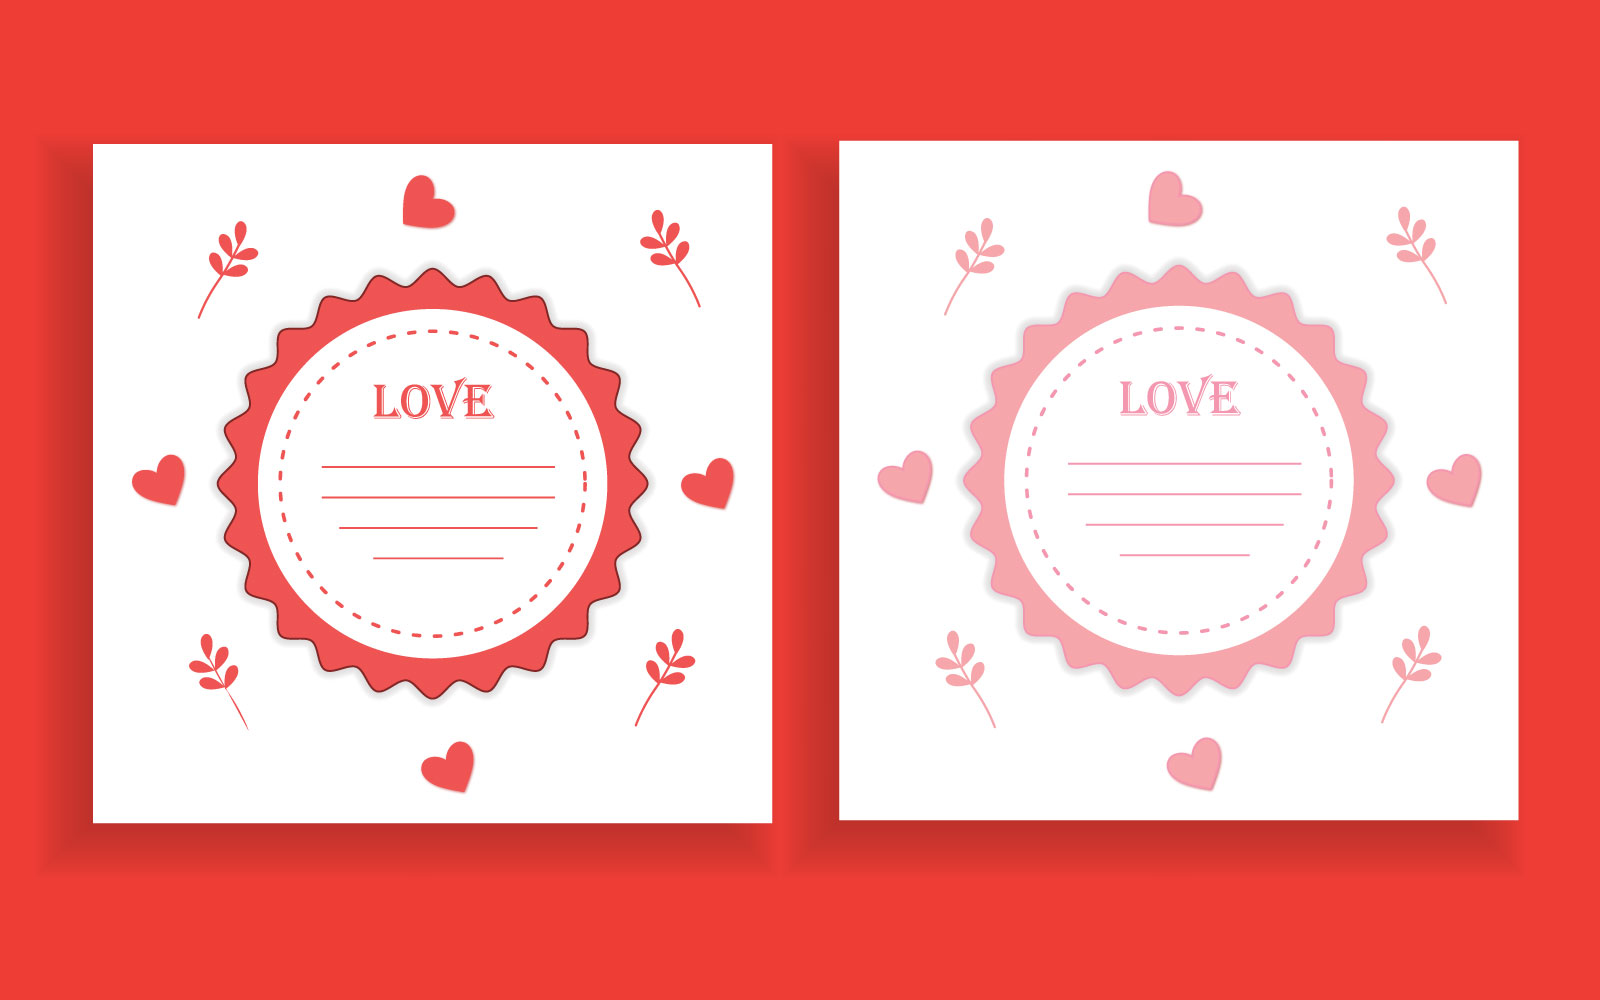 Wedding invitation card with hearts